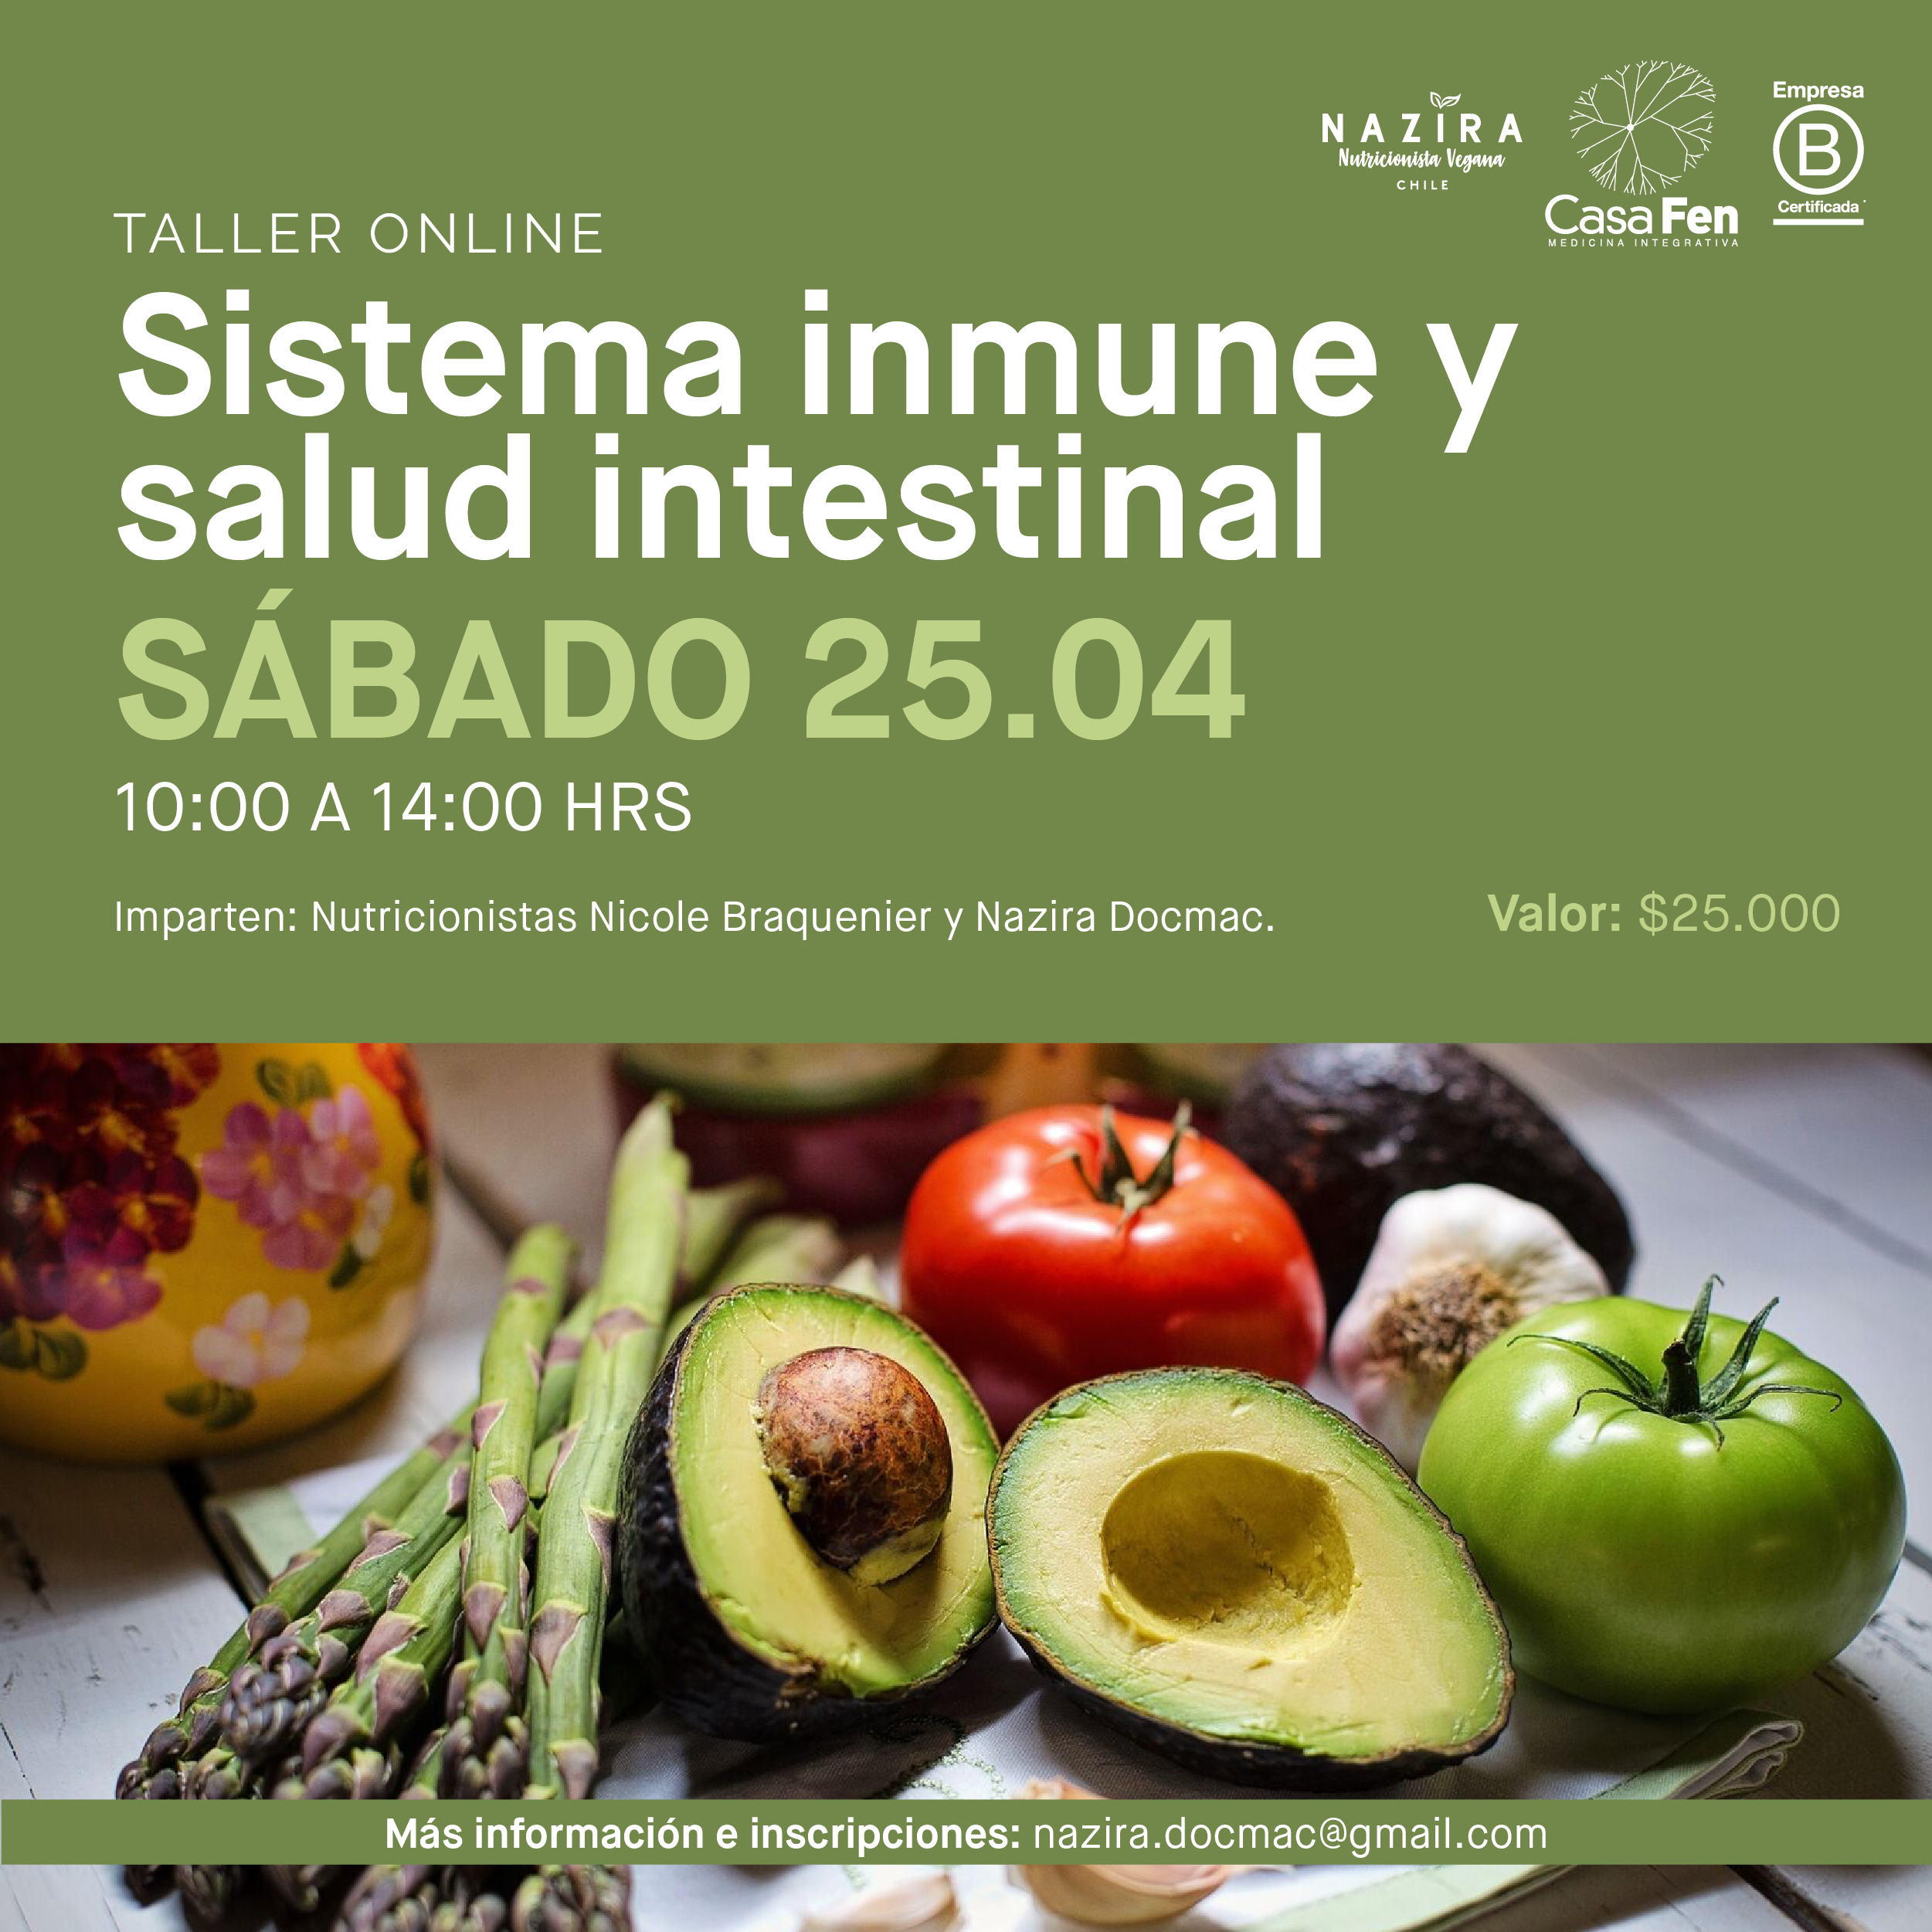 Sistema Inmune y salud intestinal, taller online - CasaFen